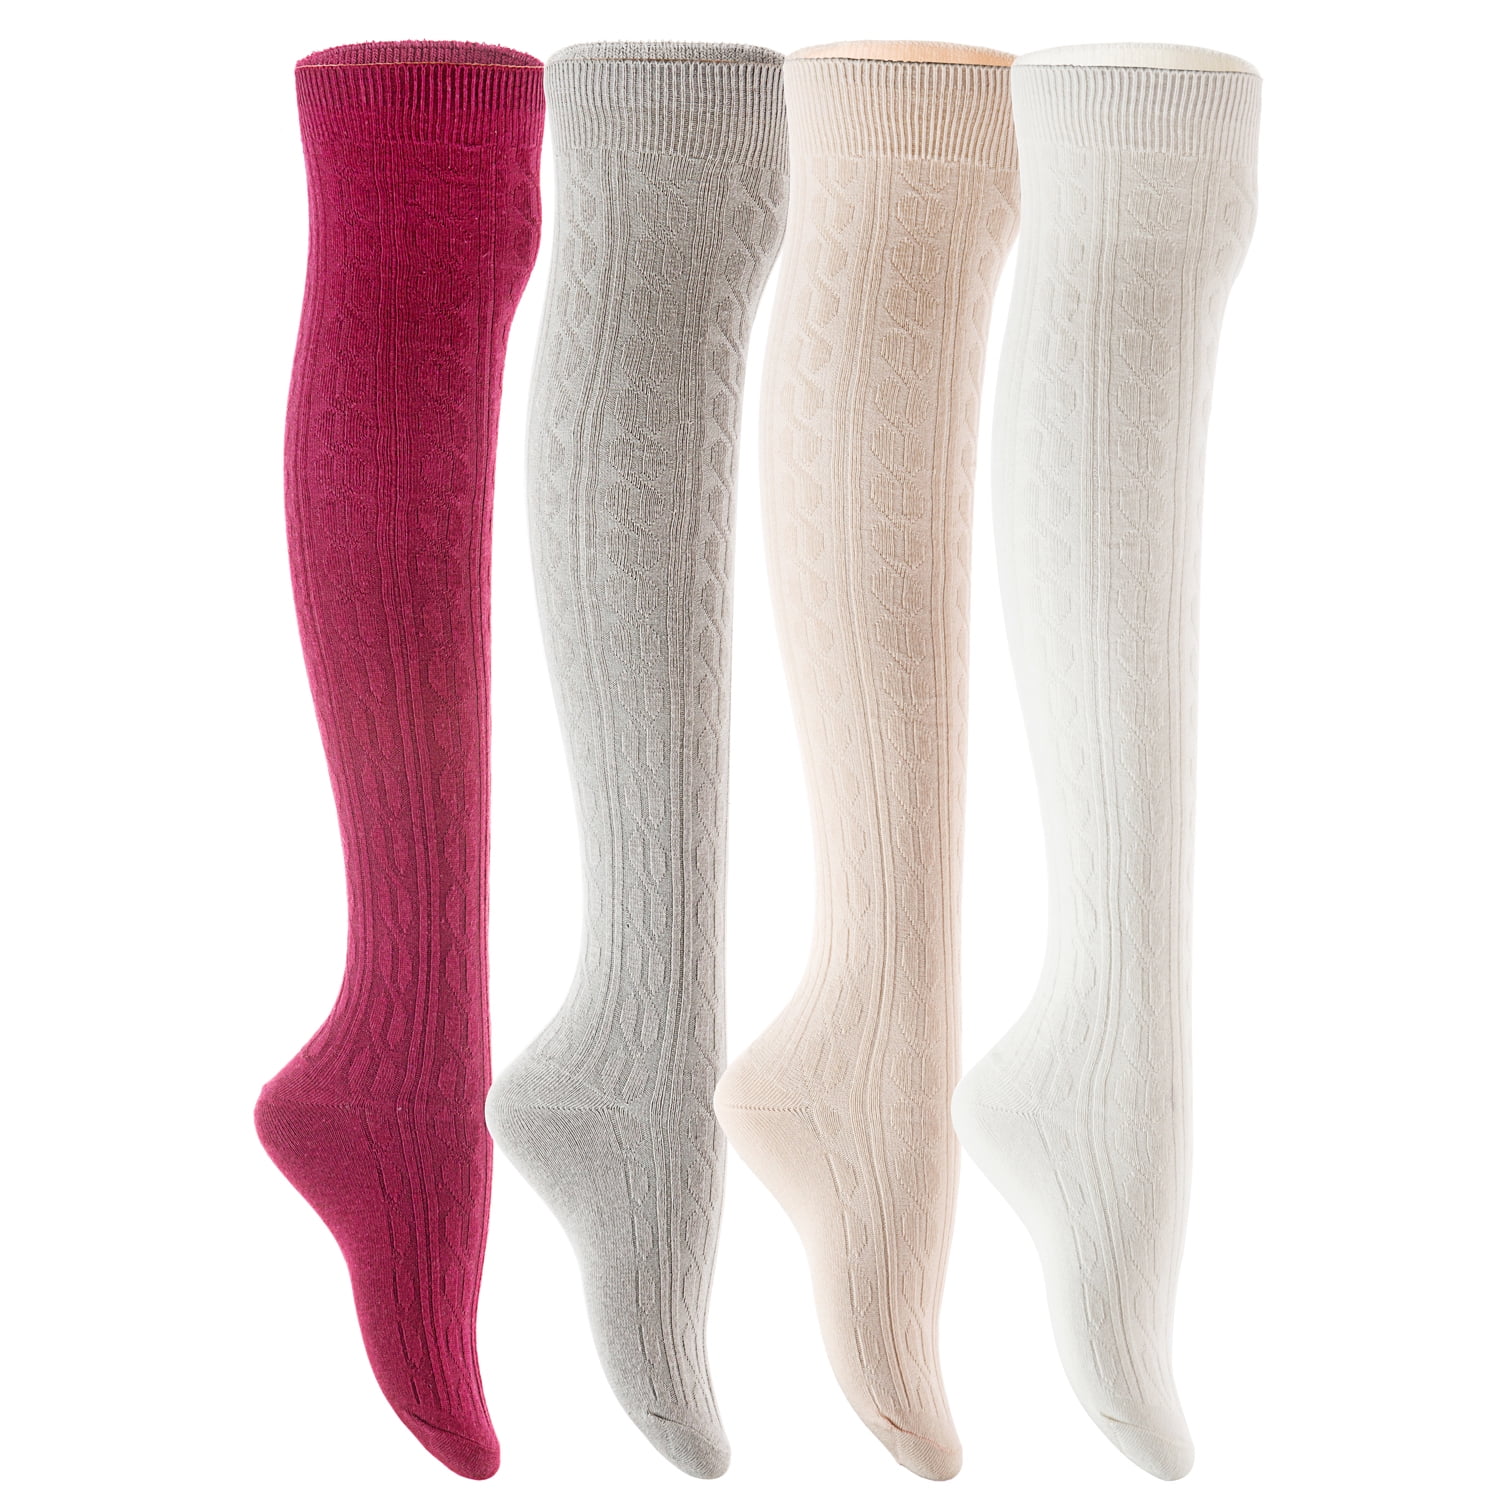 Lian LifeStyle Womens 4 Pairs Knee Length Cotton Socks Size 7-9 